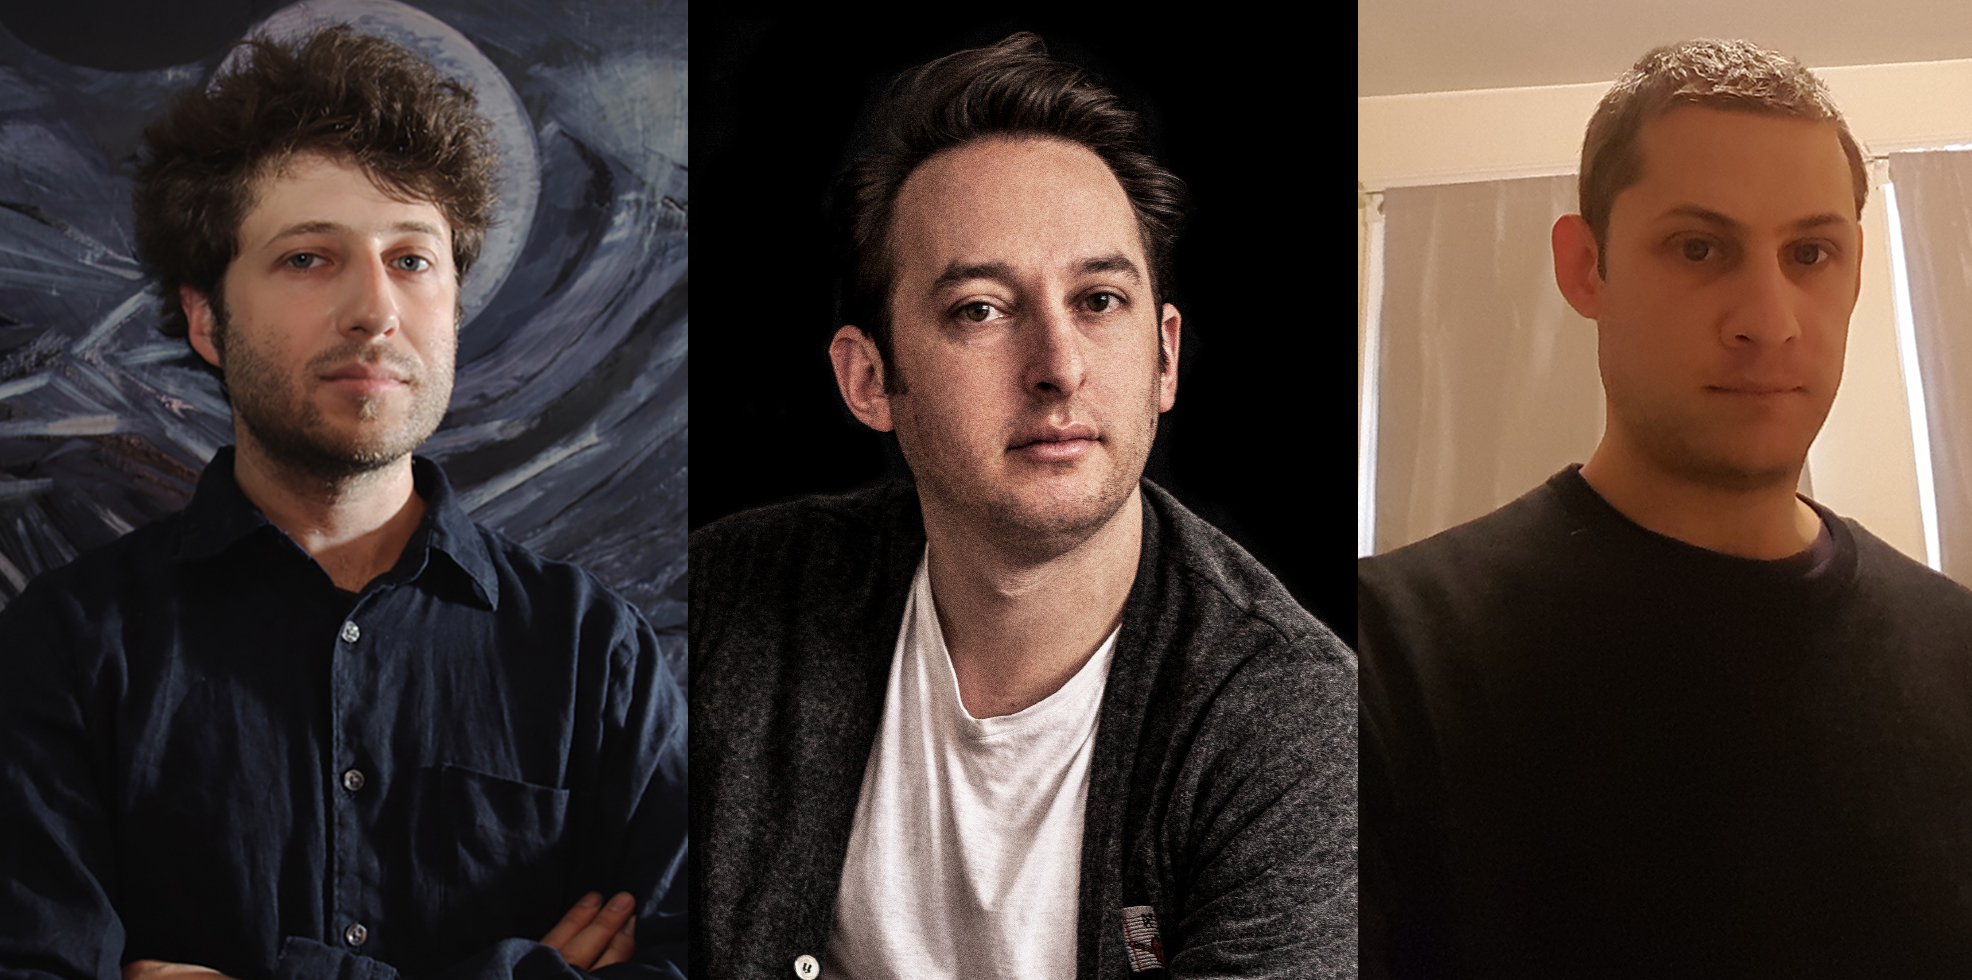 Portraits of Max Razdow, Jamie Zigelbaum, and Ollie Razdow